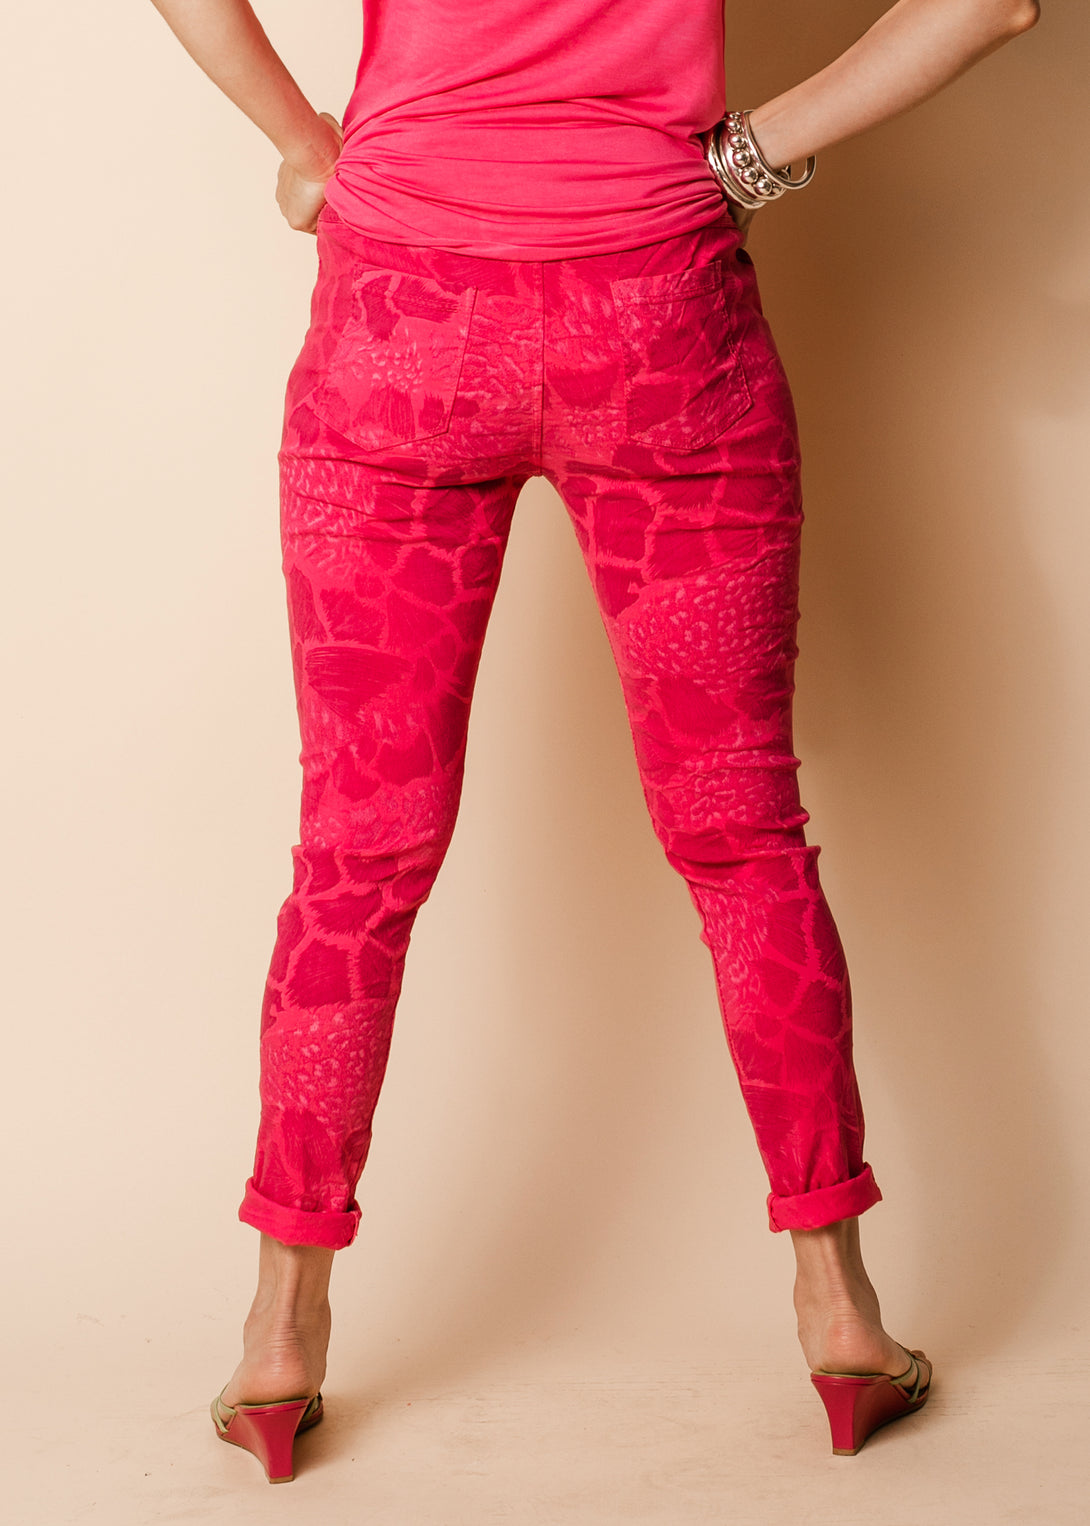 Callow Pants in Raspberry Sorbet - Imagine Fashion